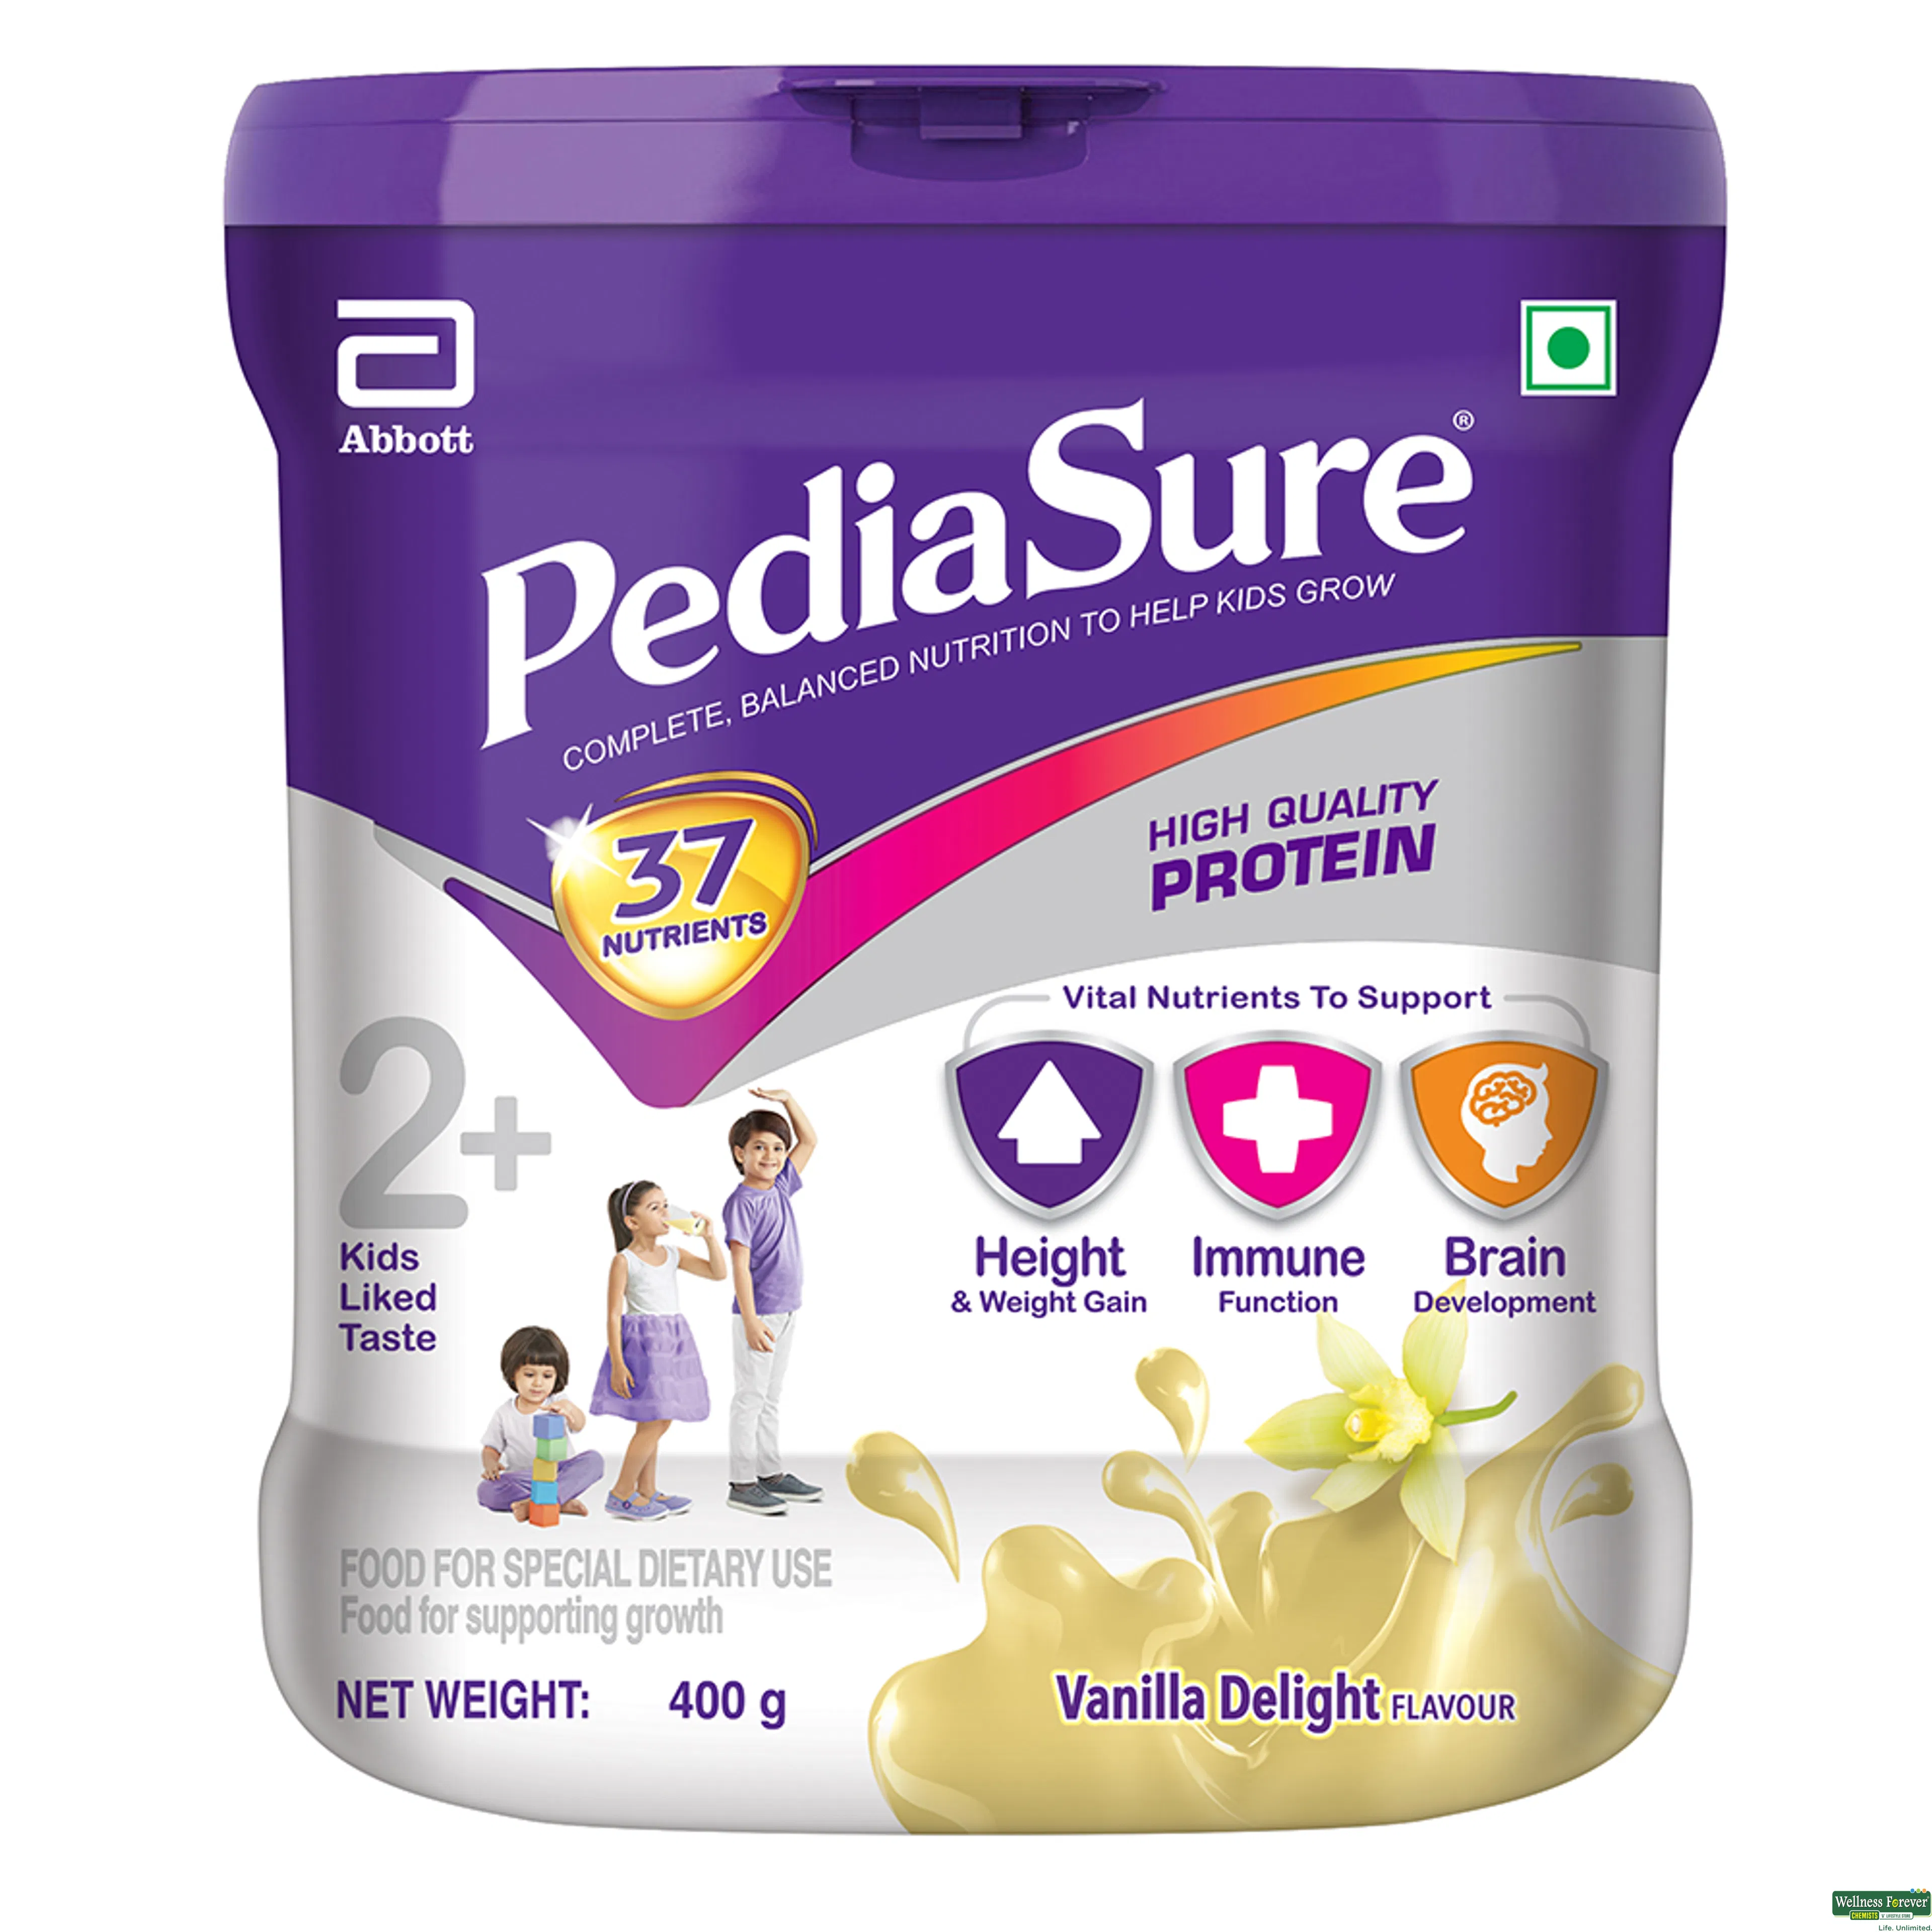 Pediasure Premium Chocolate Child Nutrition Drink Jar Of 400 G - Medanand